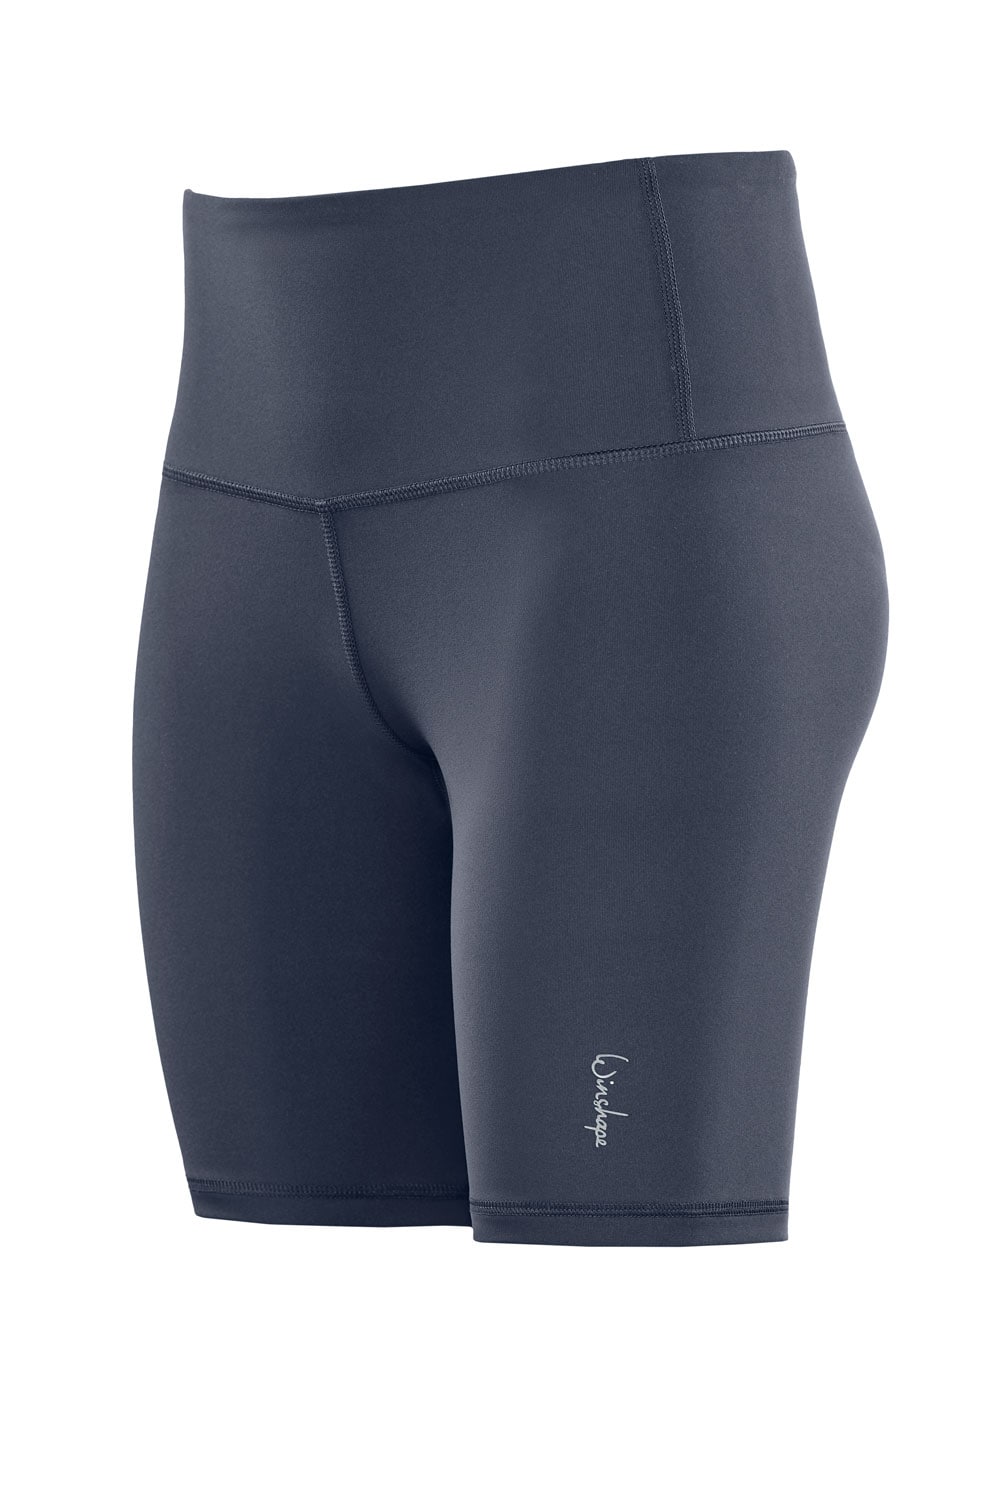 Winshape Shorts »Functional Comfort AEL412C«, weicher, Funktionsstoff Ultra bei ♕ elastischer